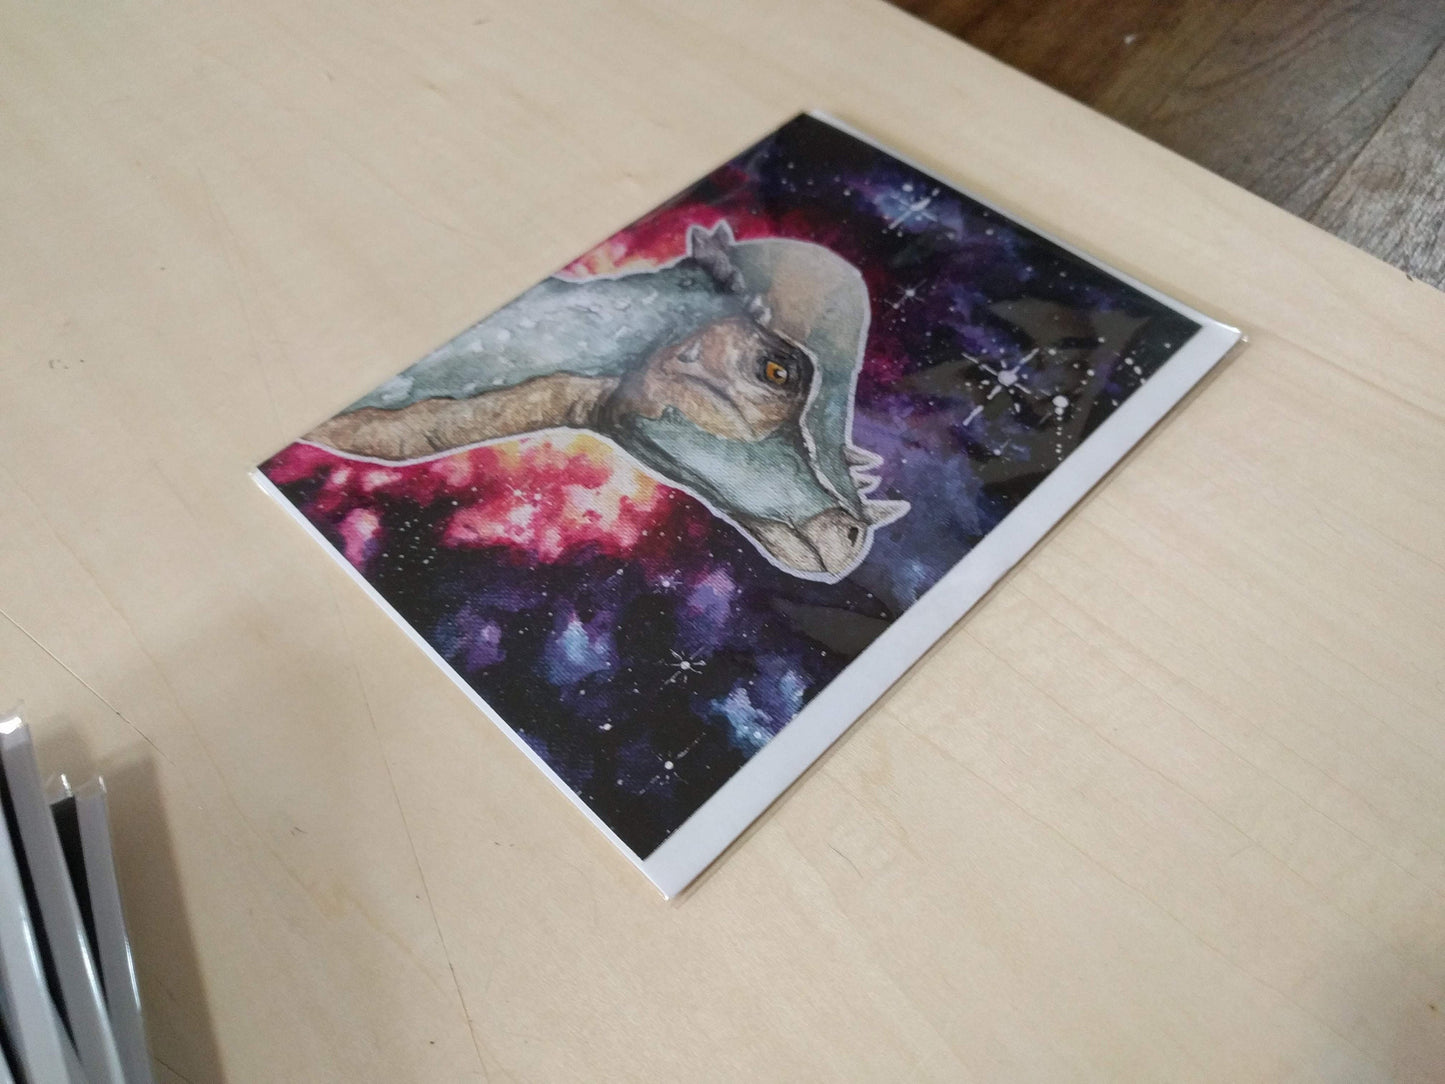 Pachycephalosaurus Greeting Card - Non-Archival Art Prints - Note Card